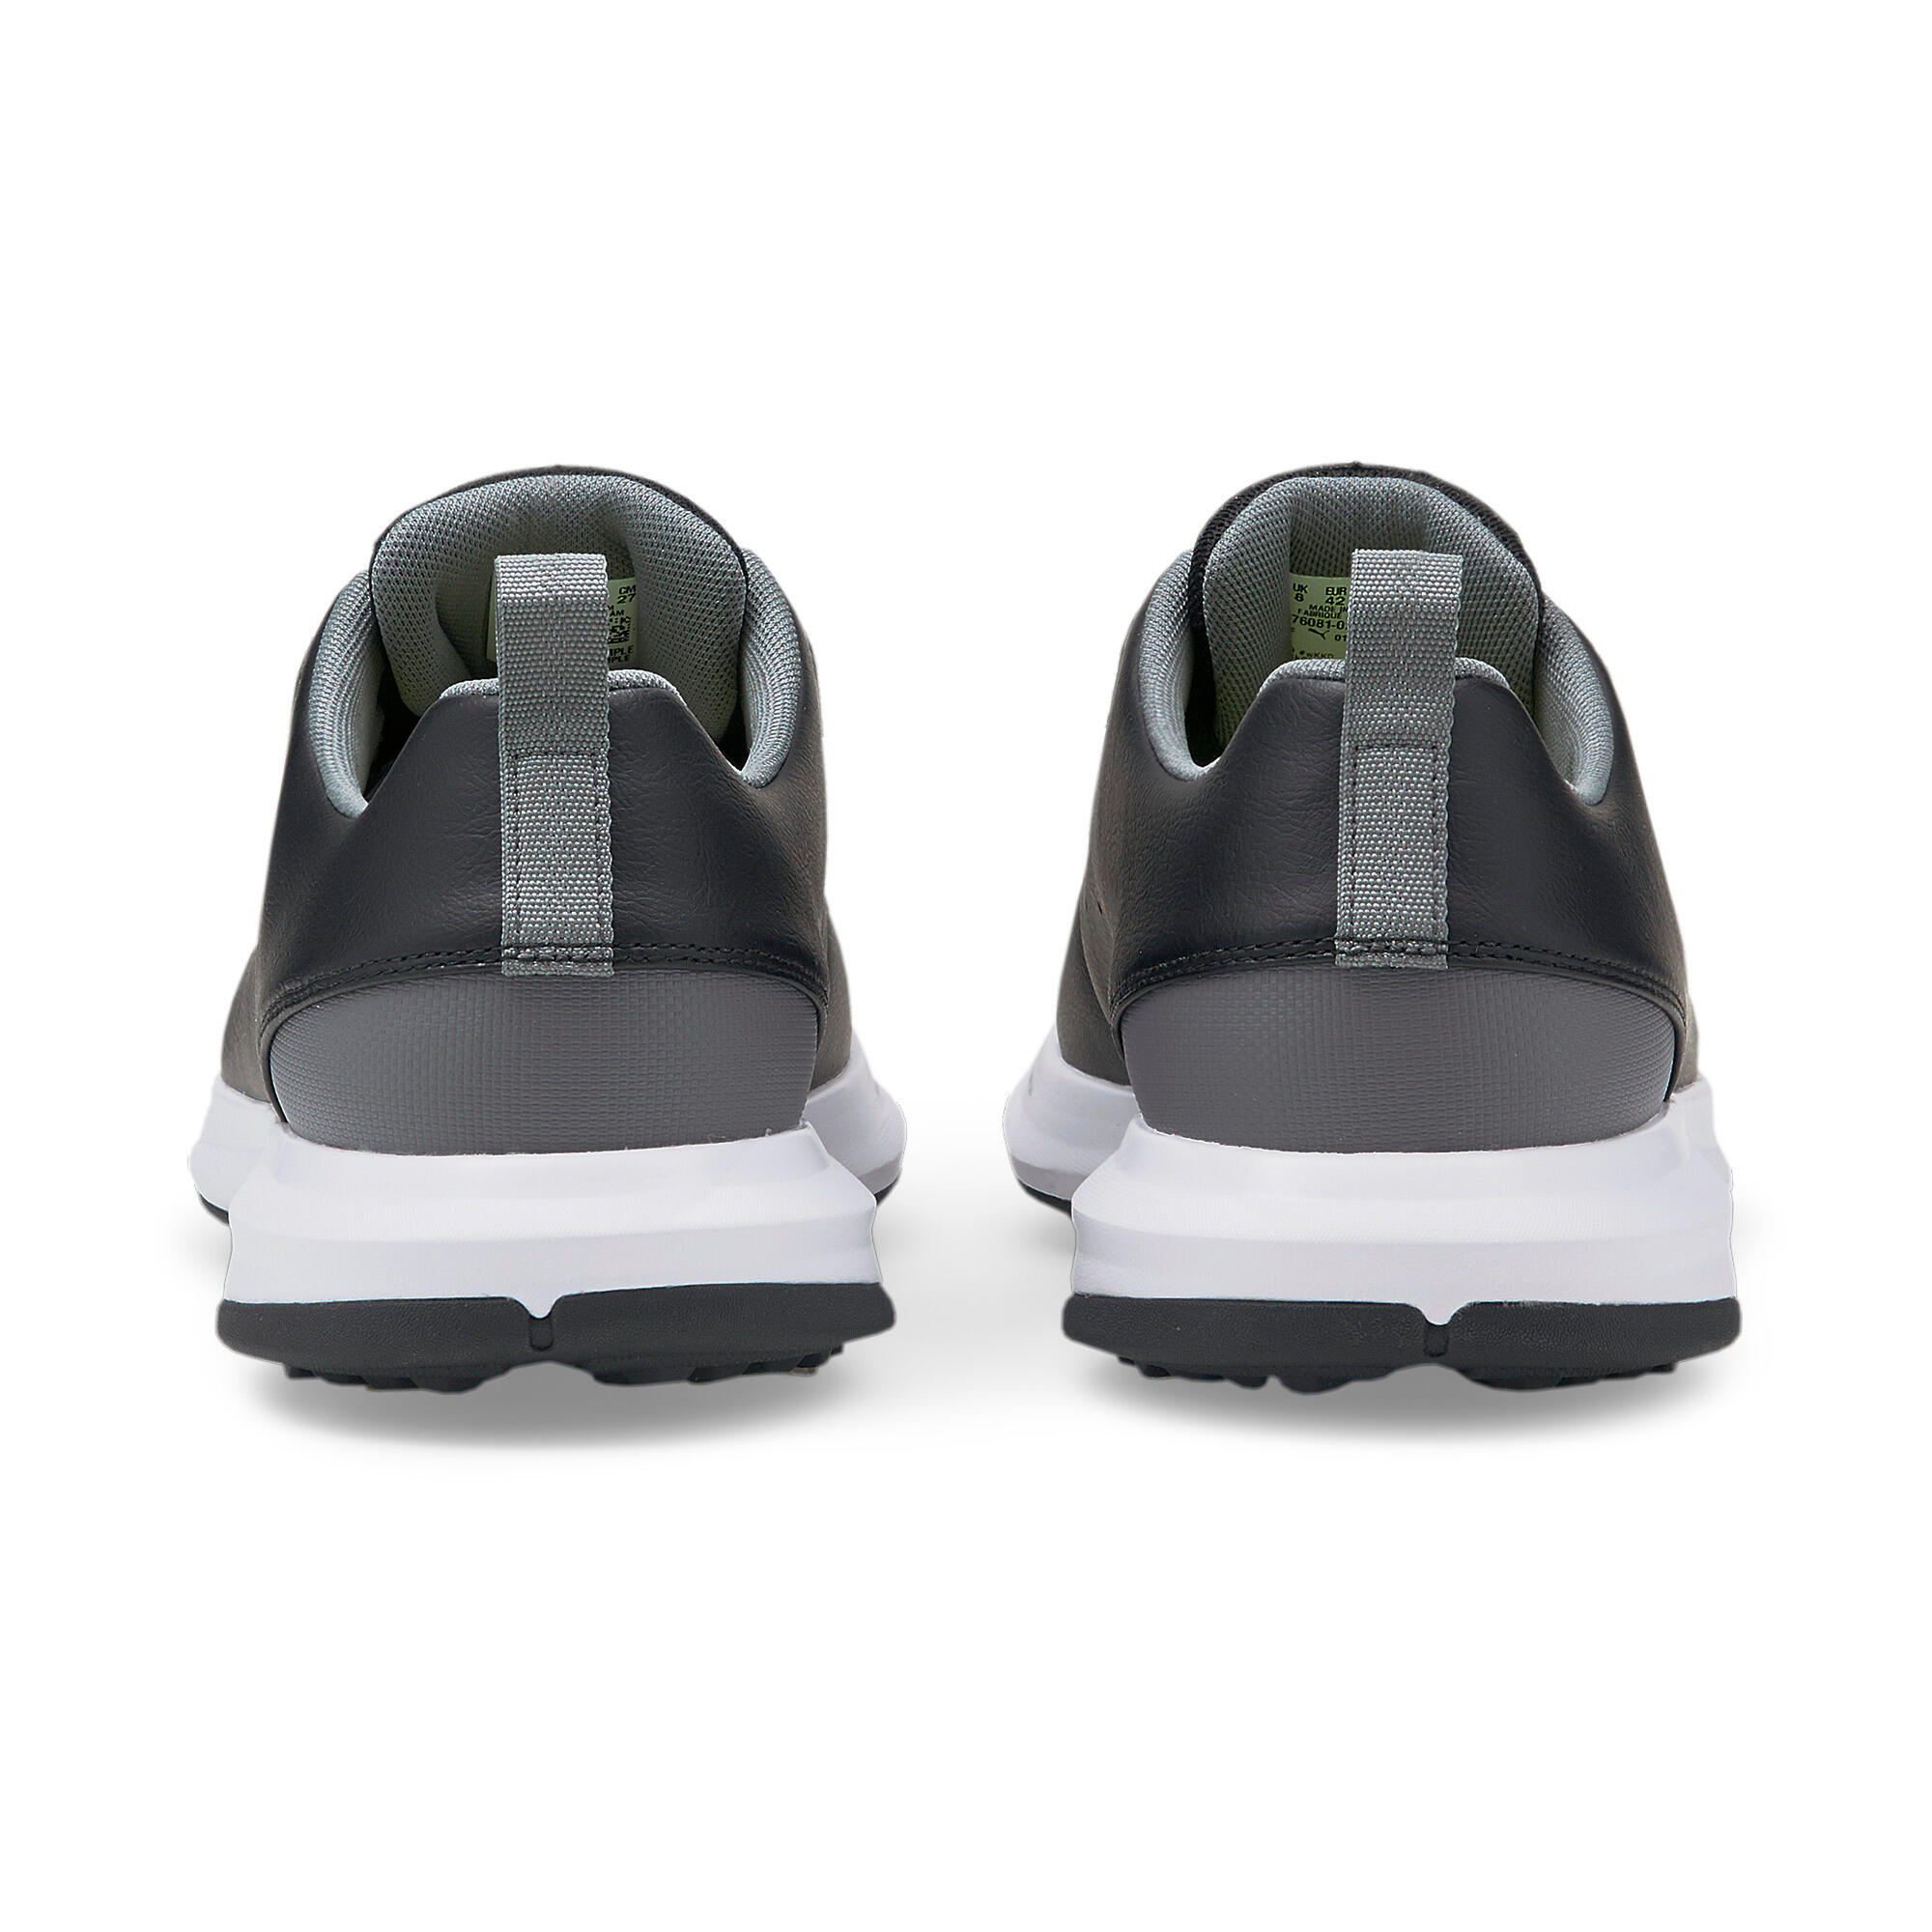 PUMA Mens FUSION FX Tech Golf Shoes - Black-Silver-Quiet Shade 5/6